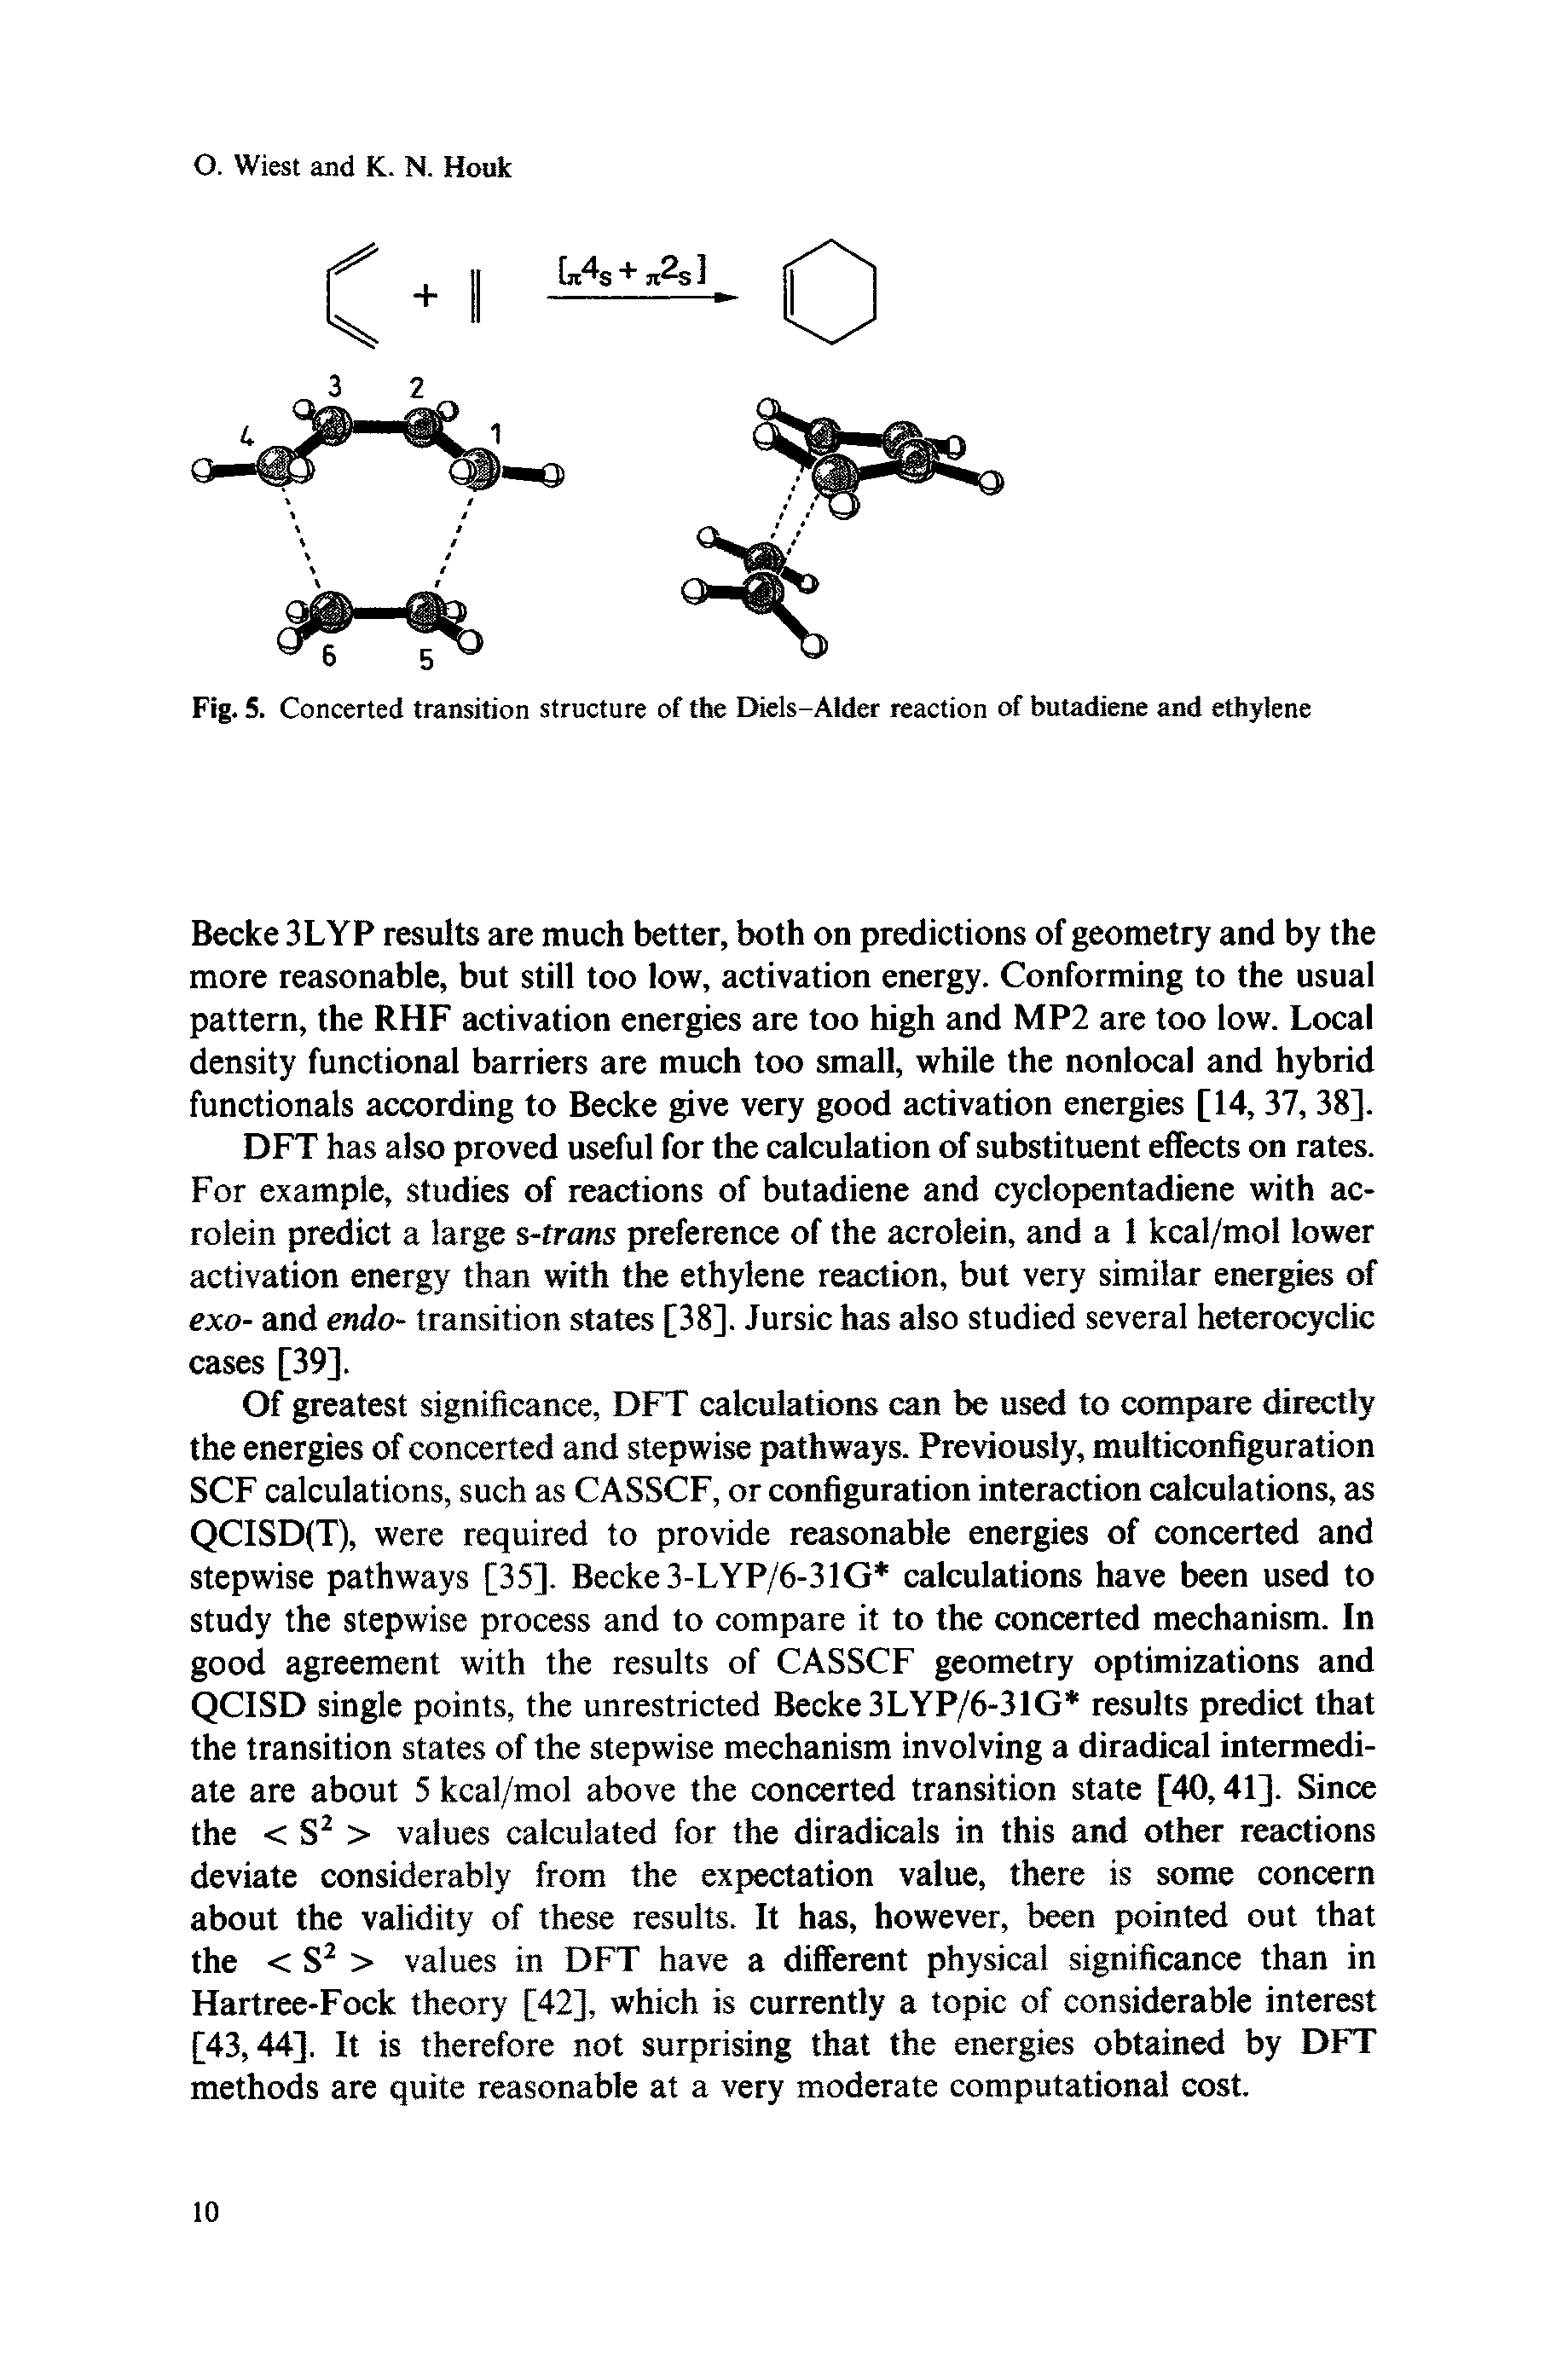 Fig. 5. Concerted transition structure of the Diels-Alder reaction of butadiene and ethylene...